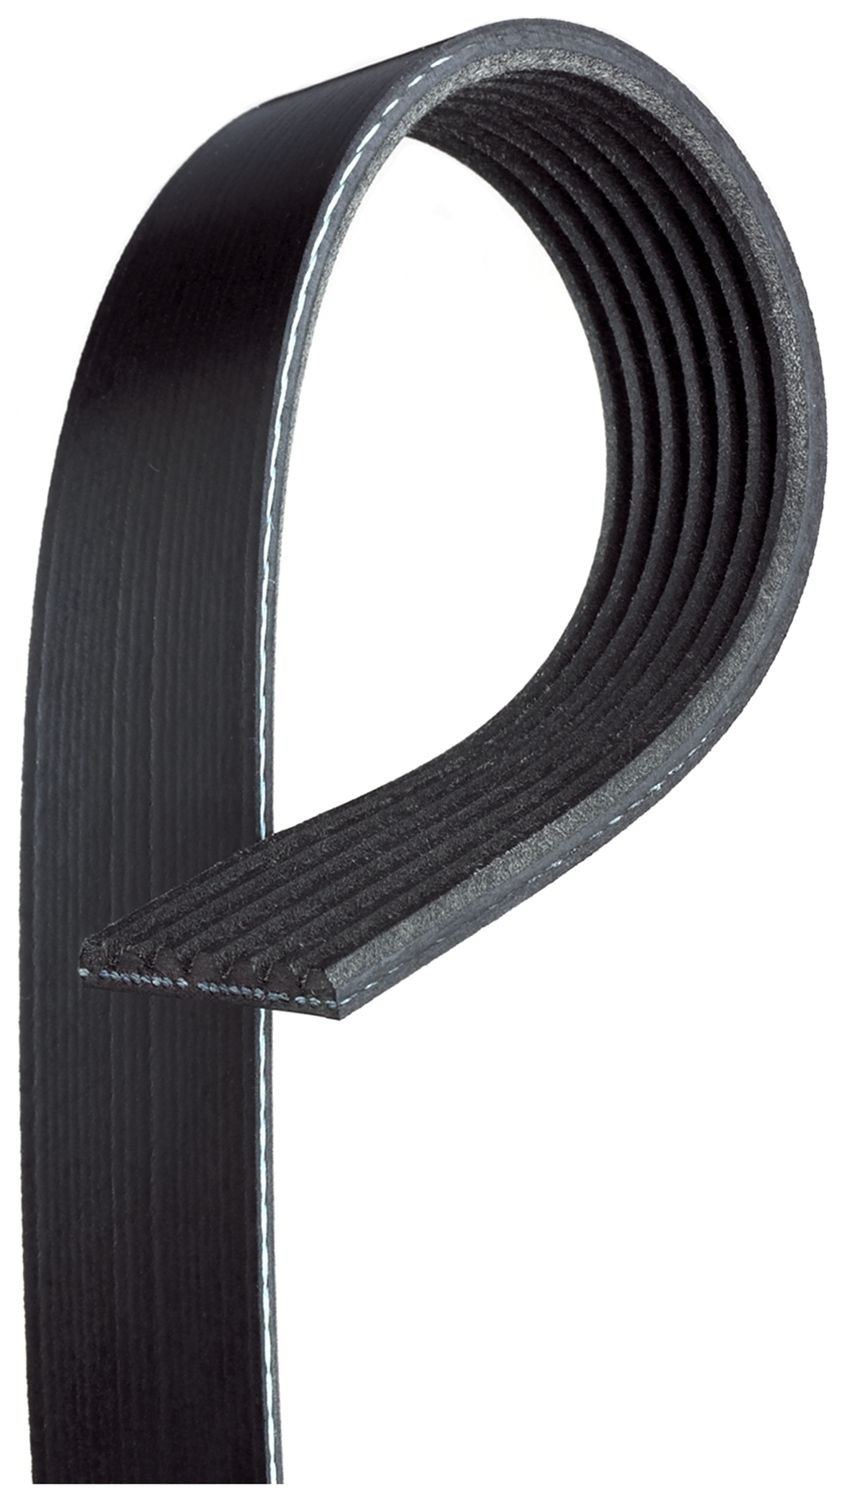 GATES 7PK1165 Serpentine belt 1165mm, 7, G-Force™ C12™ CVT Belt